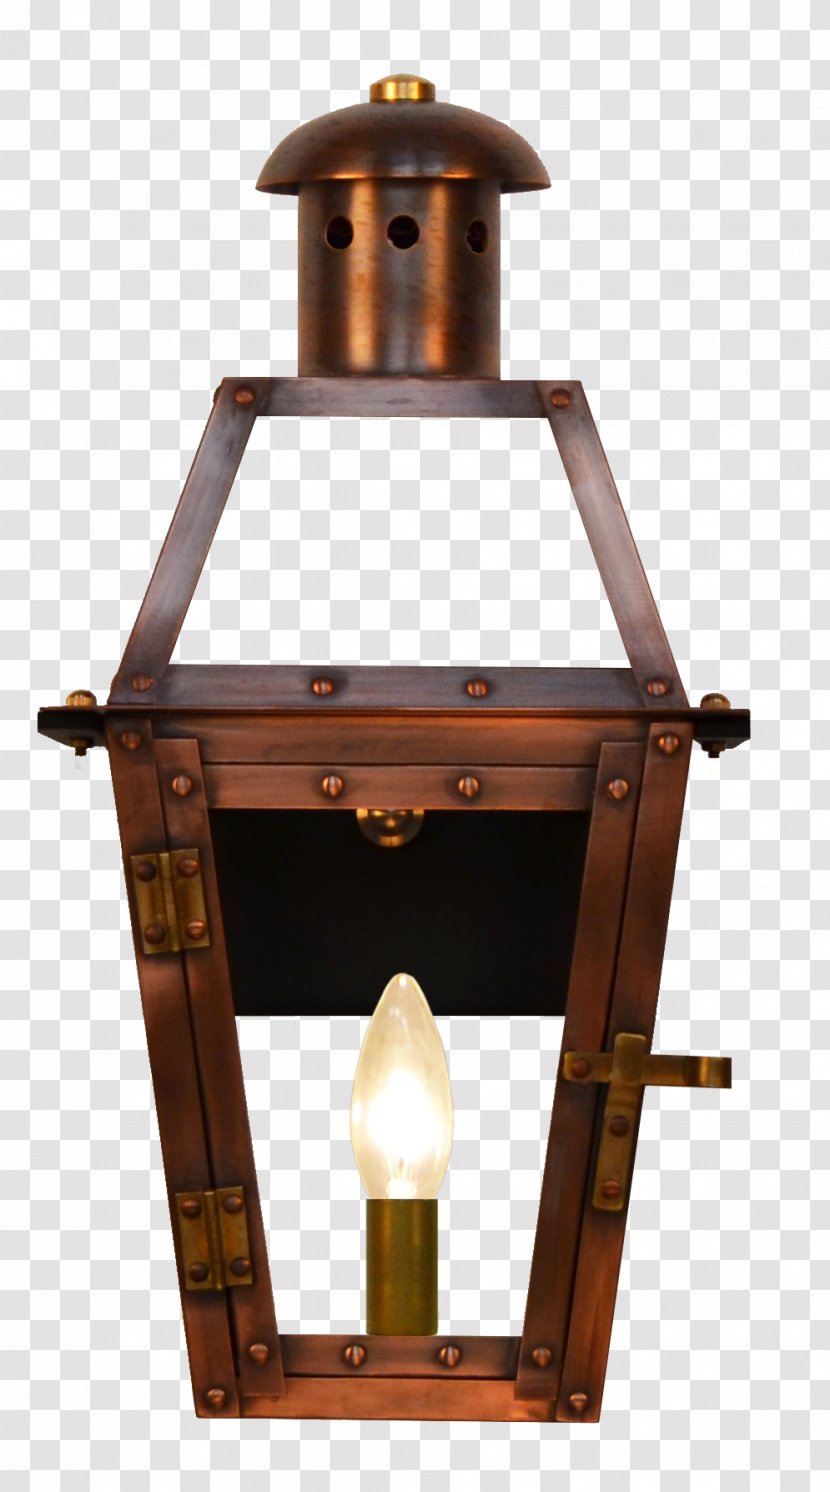 Gas Lighting Light Fixture Lantern - Antique Transparent PNG